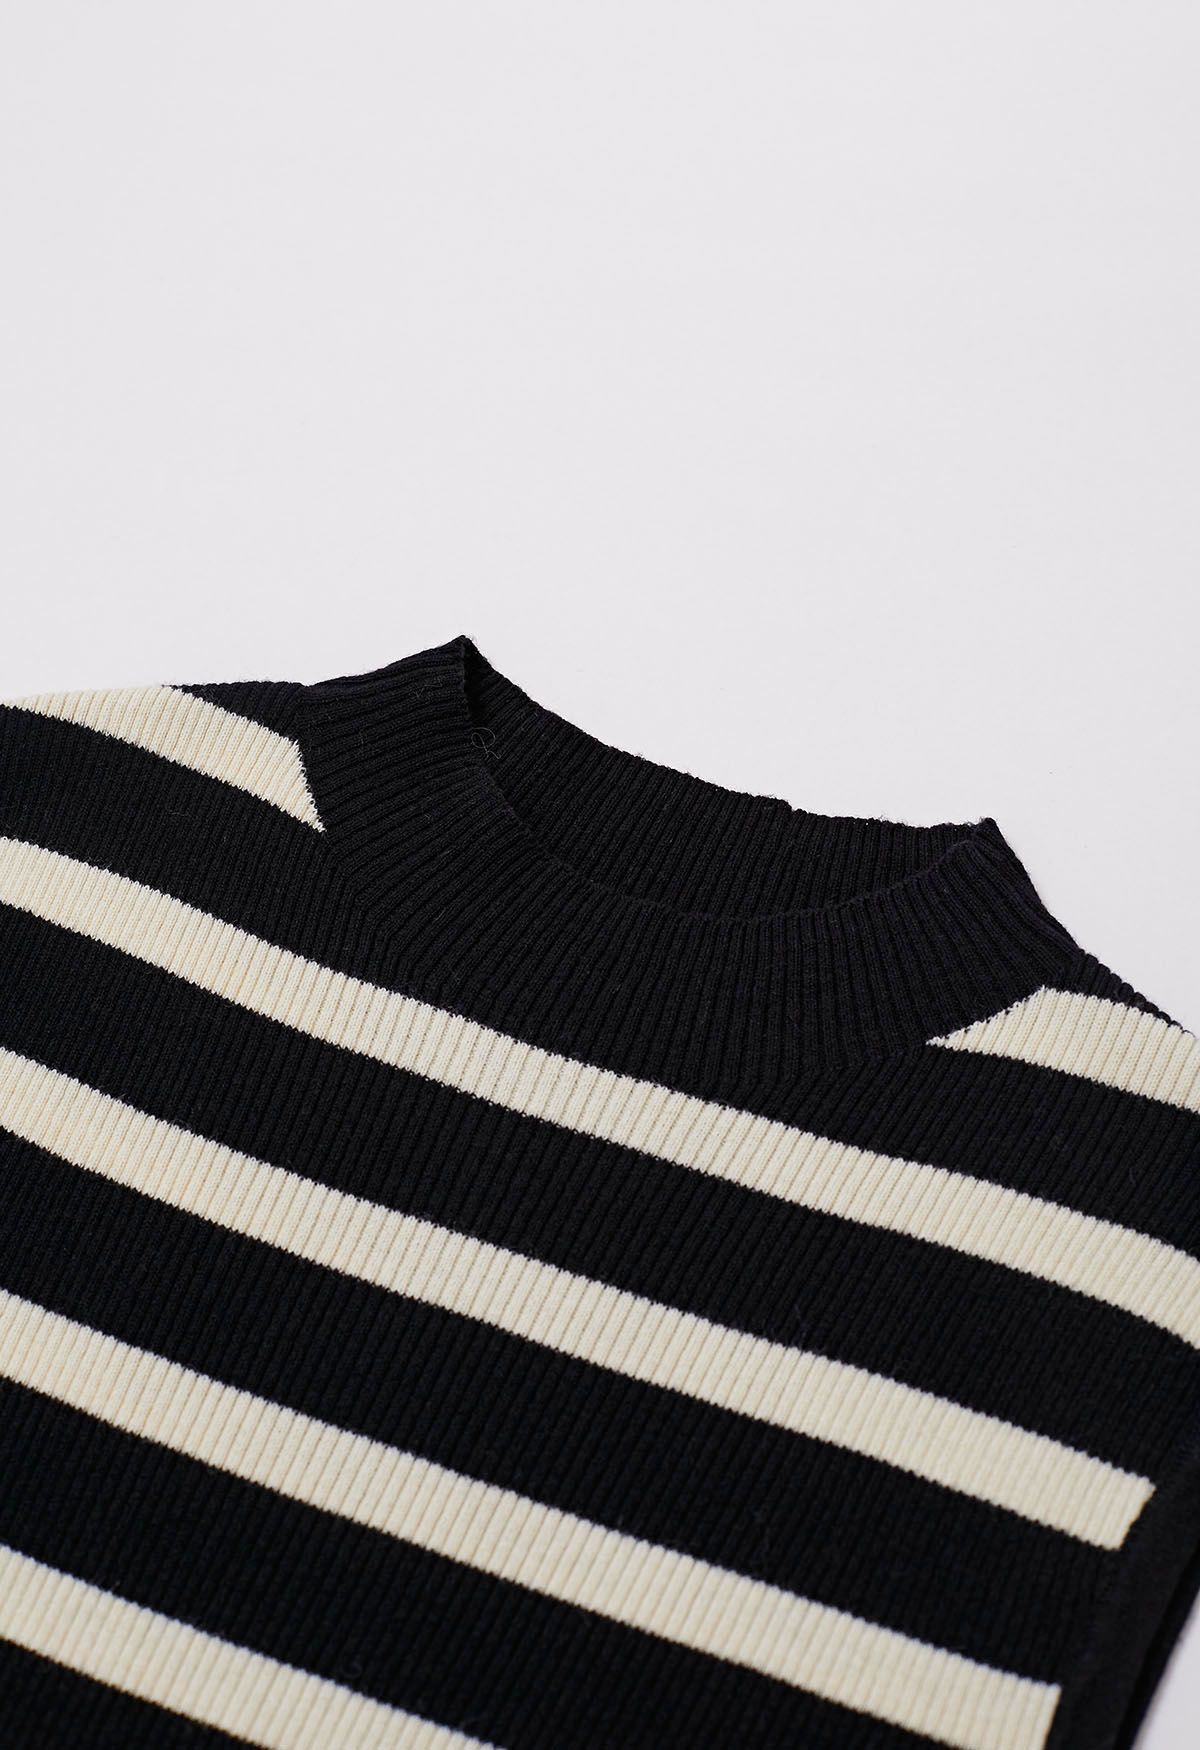 Contrast Stripe Sleeveless Knit Top in Black